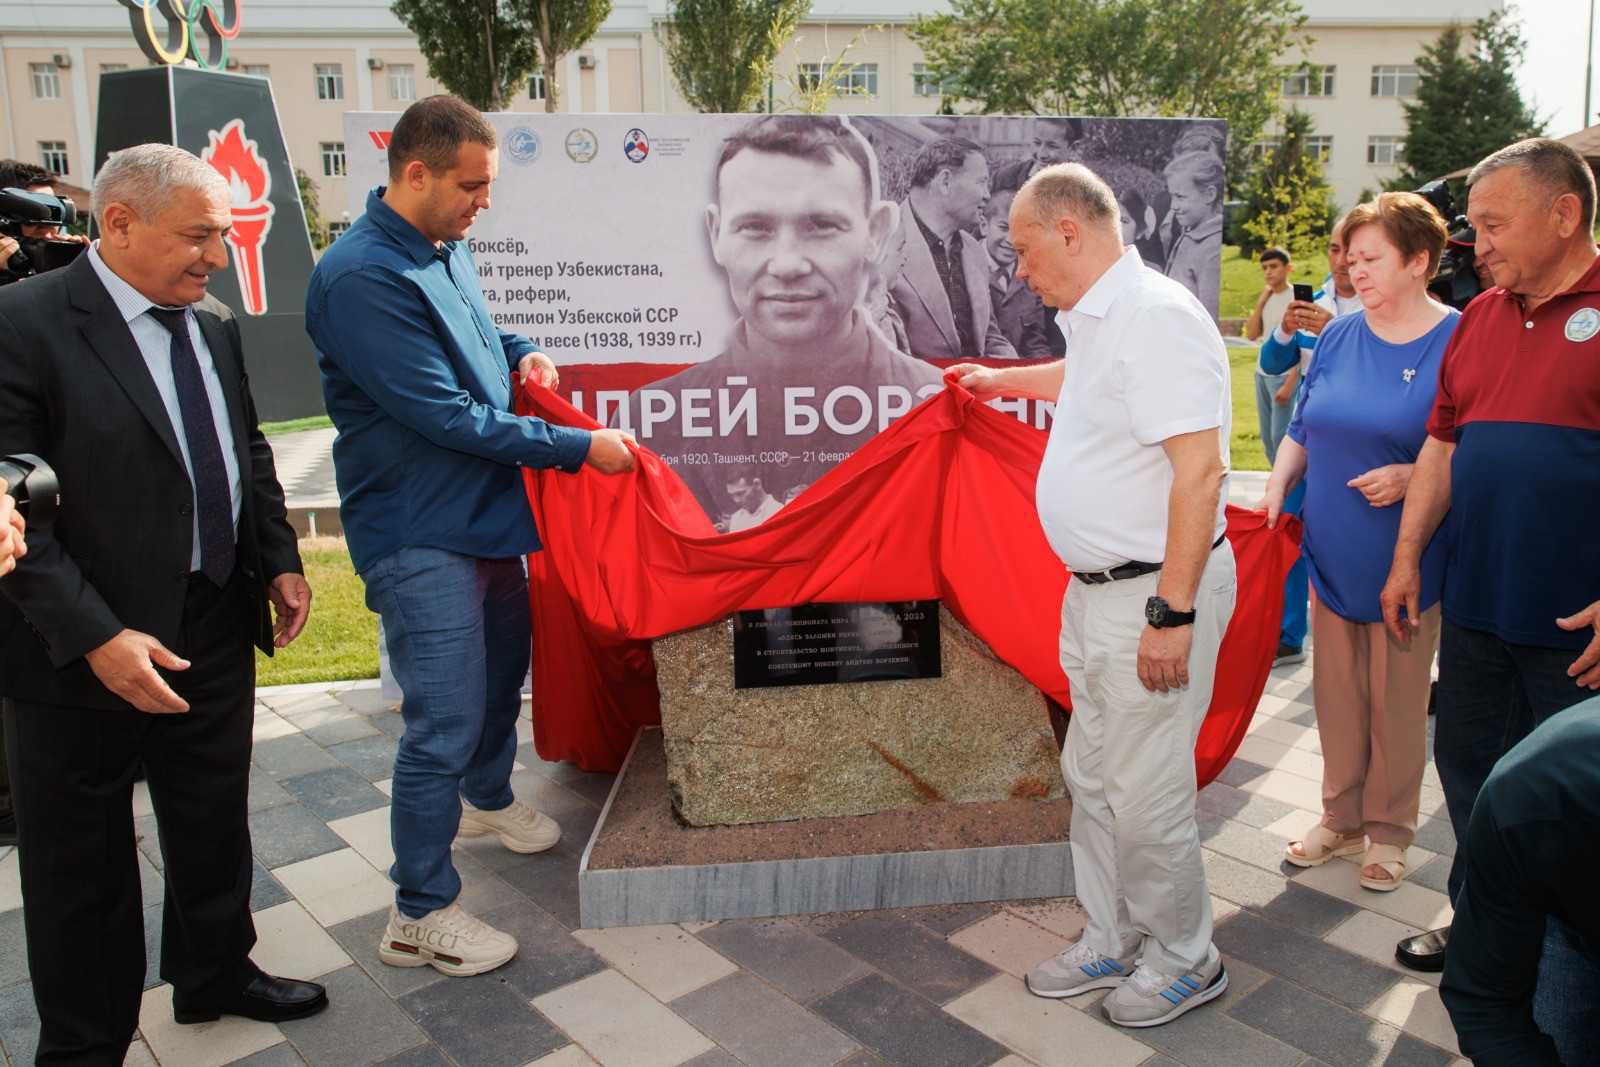 IBA President Umar Kremlev, left, unveiled a foundation stone to honour former Soviet boxer Andrei Borzenko ©IBA